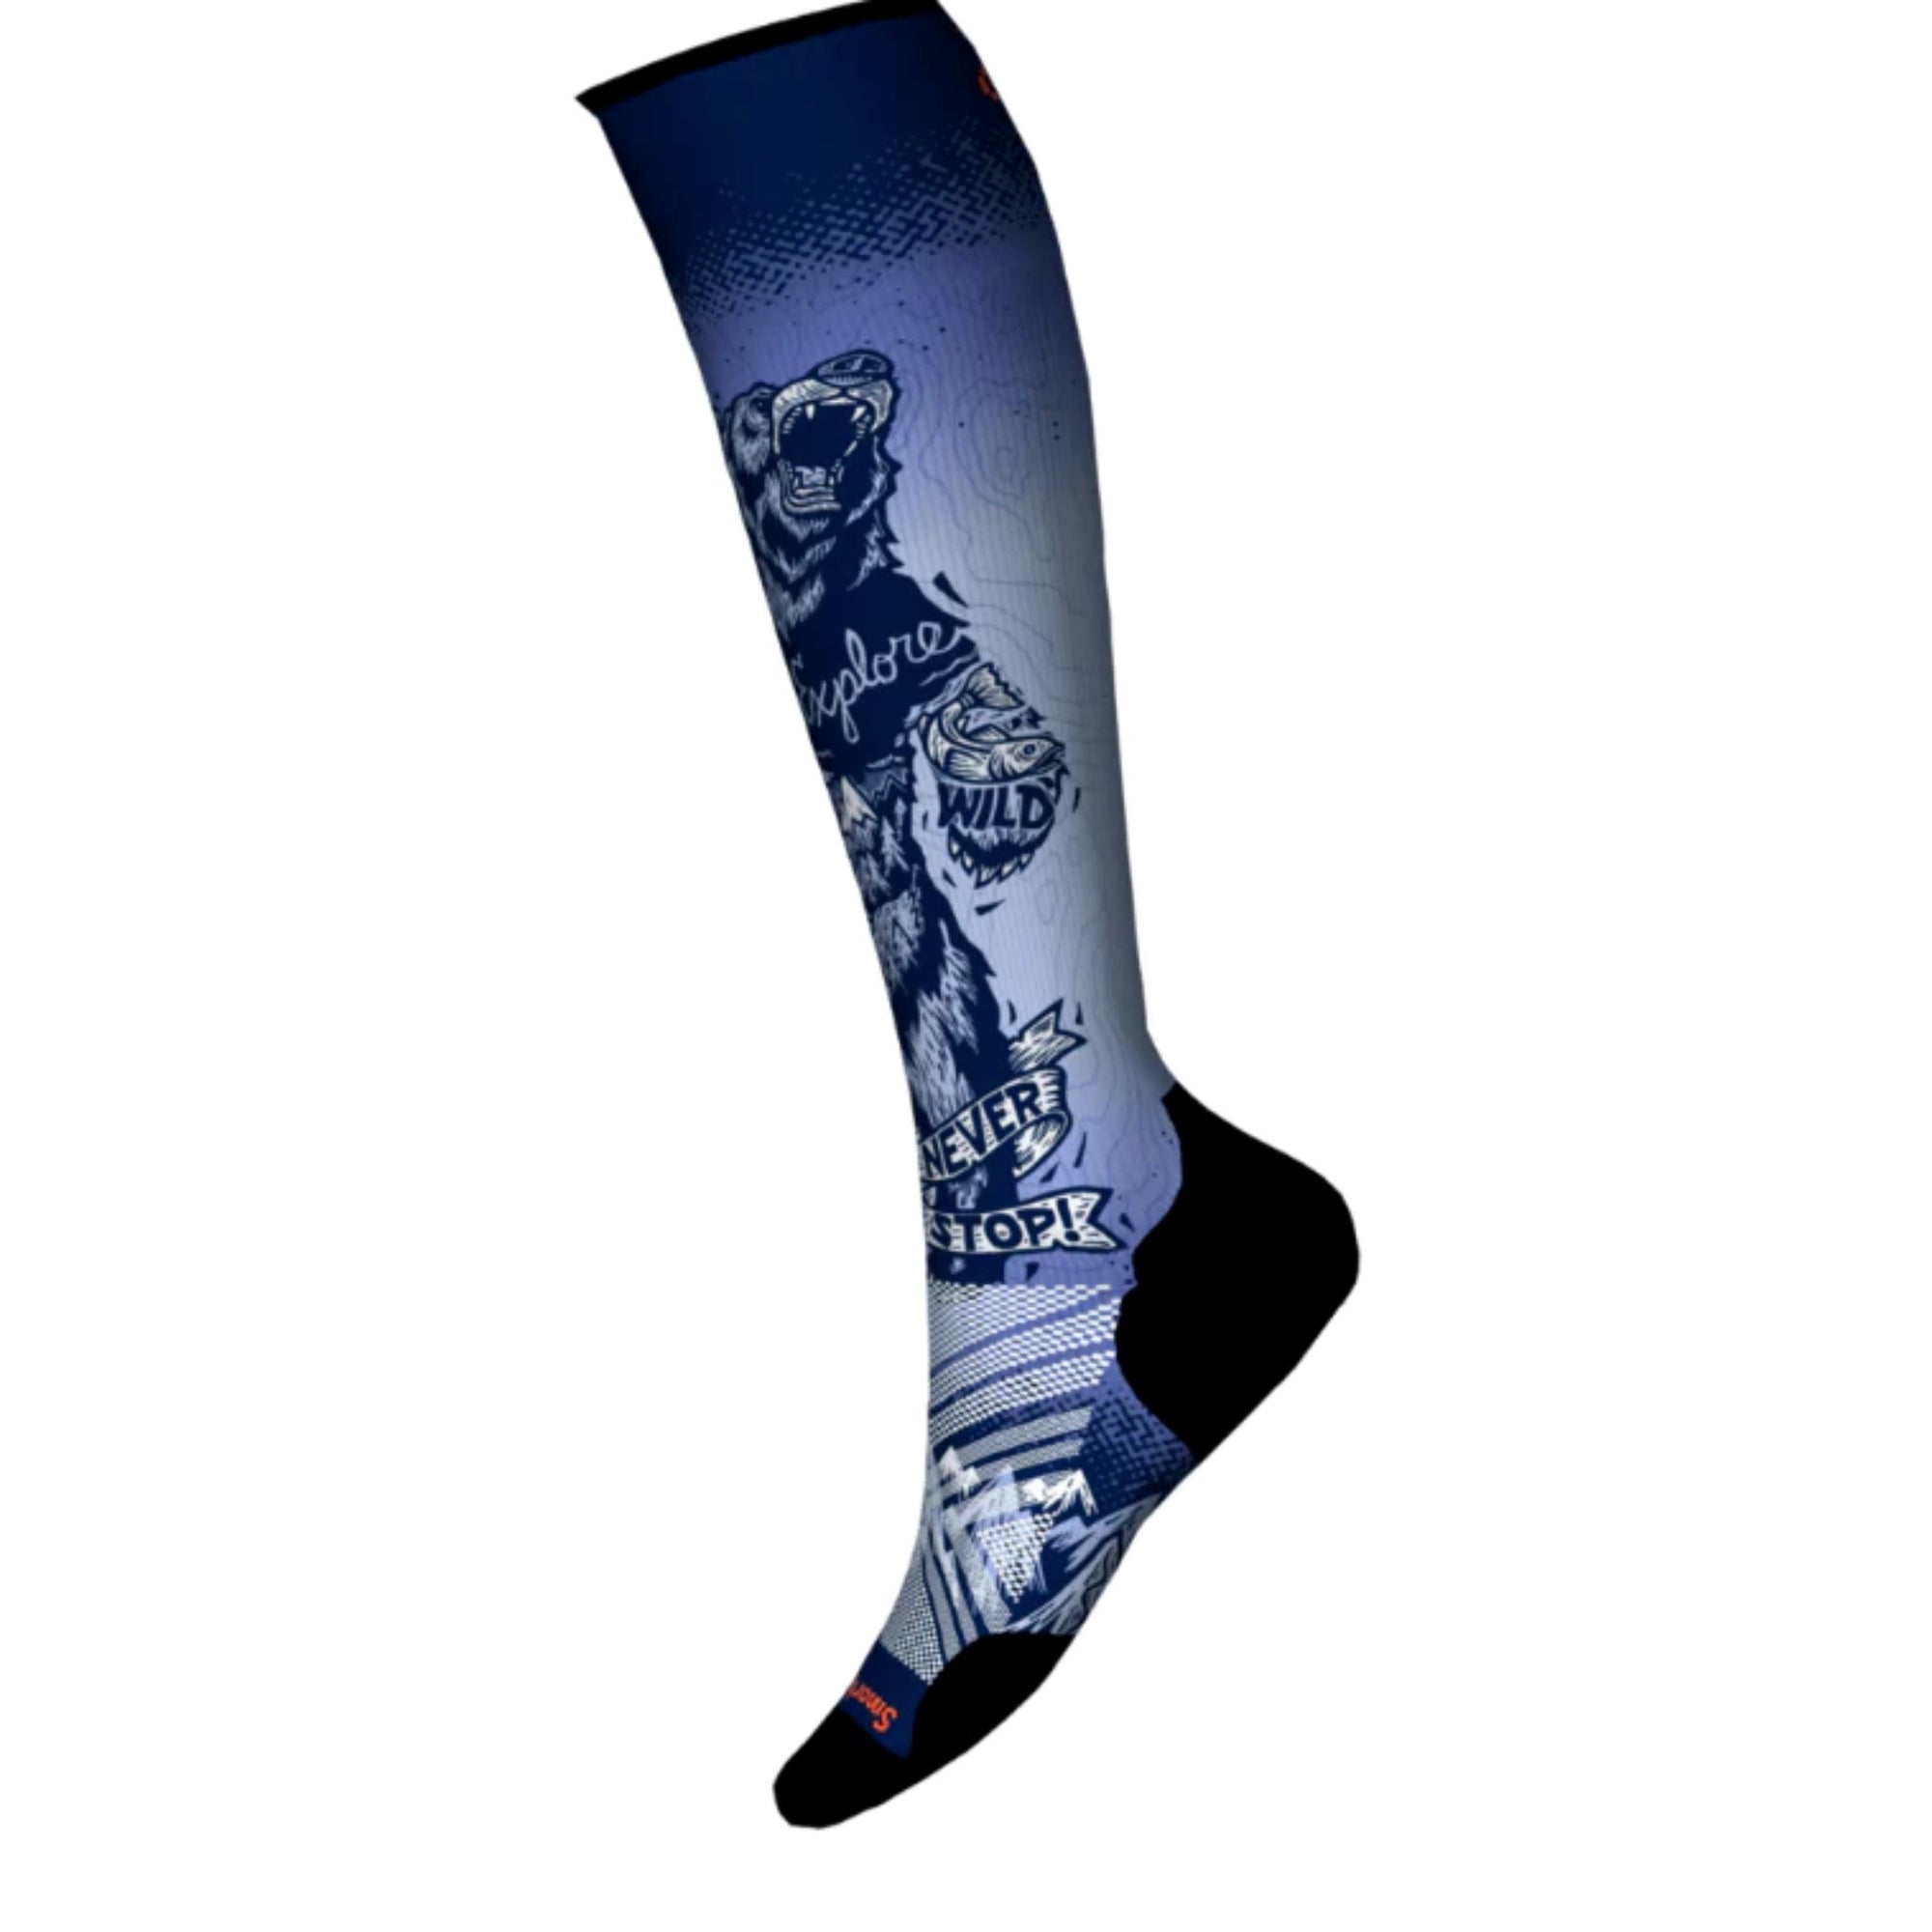 Smartwool Ski Targeted Cushion Socks - Always Explore Print Socks Smartwool M - Men(6-8.5US / 38-41EU)Women(7-9.5US / 38-41EU) 